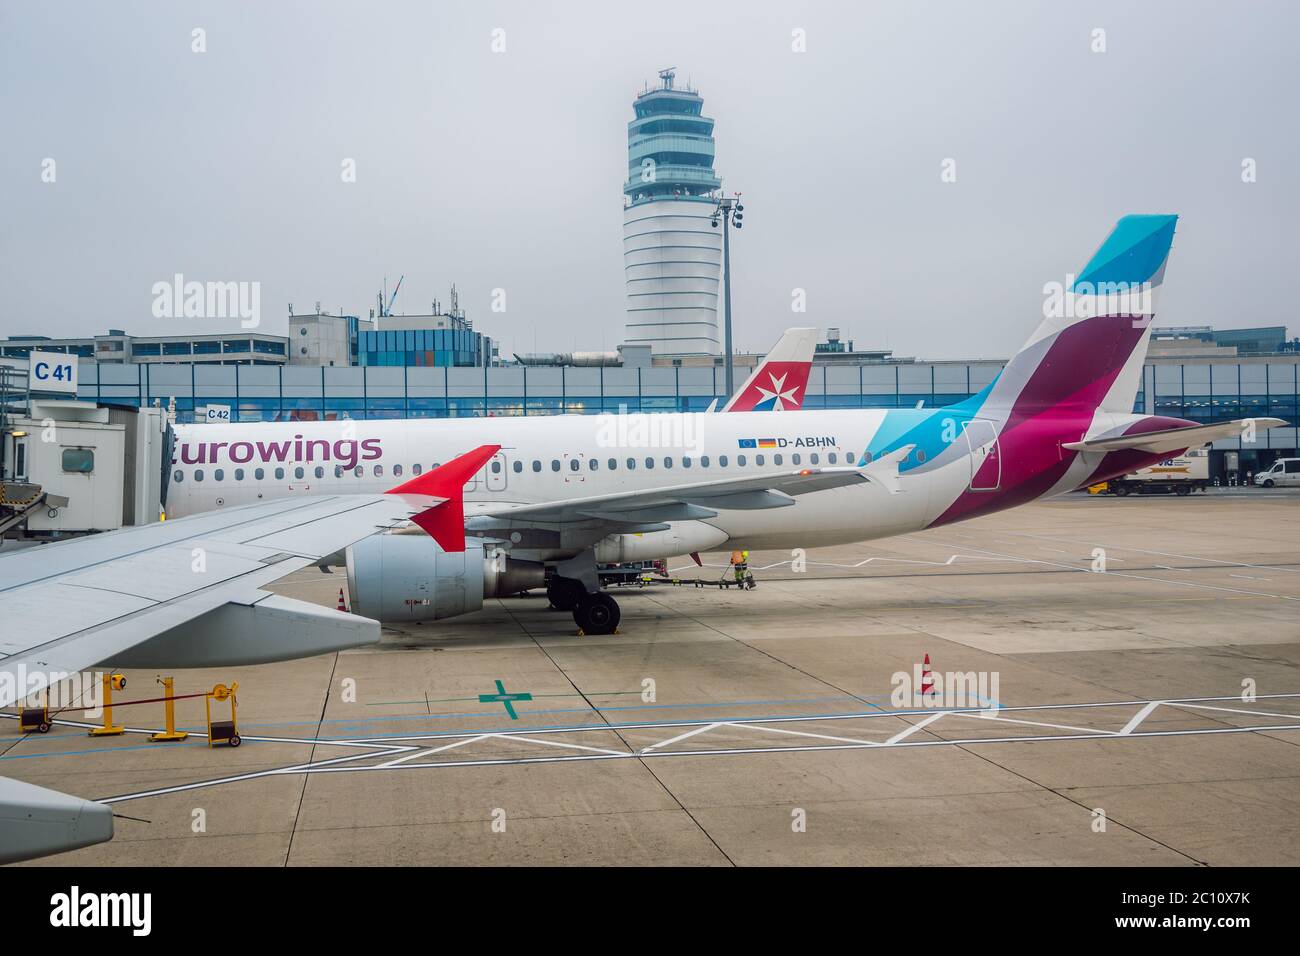 Eurowings Flugzeug Airbus A320-200 am Gate, Flughafen Wien. Eurowings ist die Low-Cost-Airline der Lufthansa Group. Stockfoto